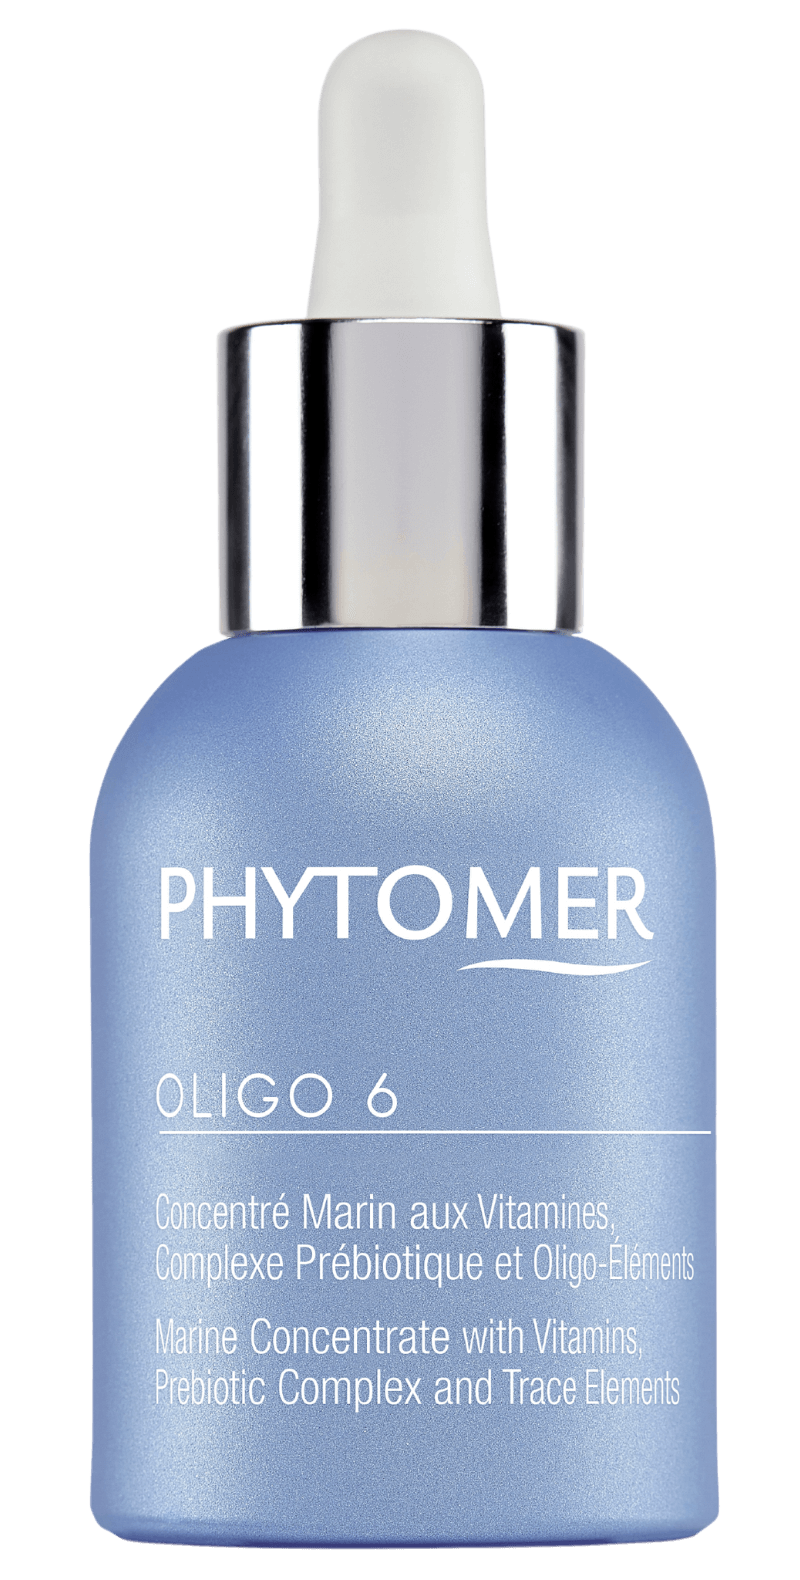 PHYTOMER Oligo 6 with Vitamins, Prebiotic Complex and Trace Elements